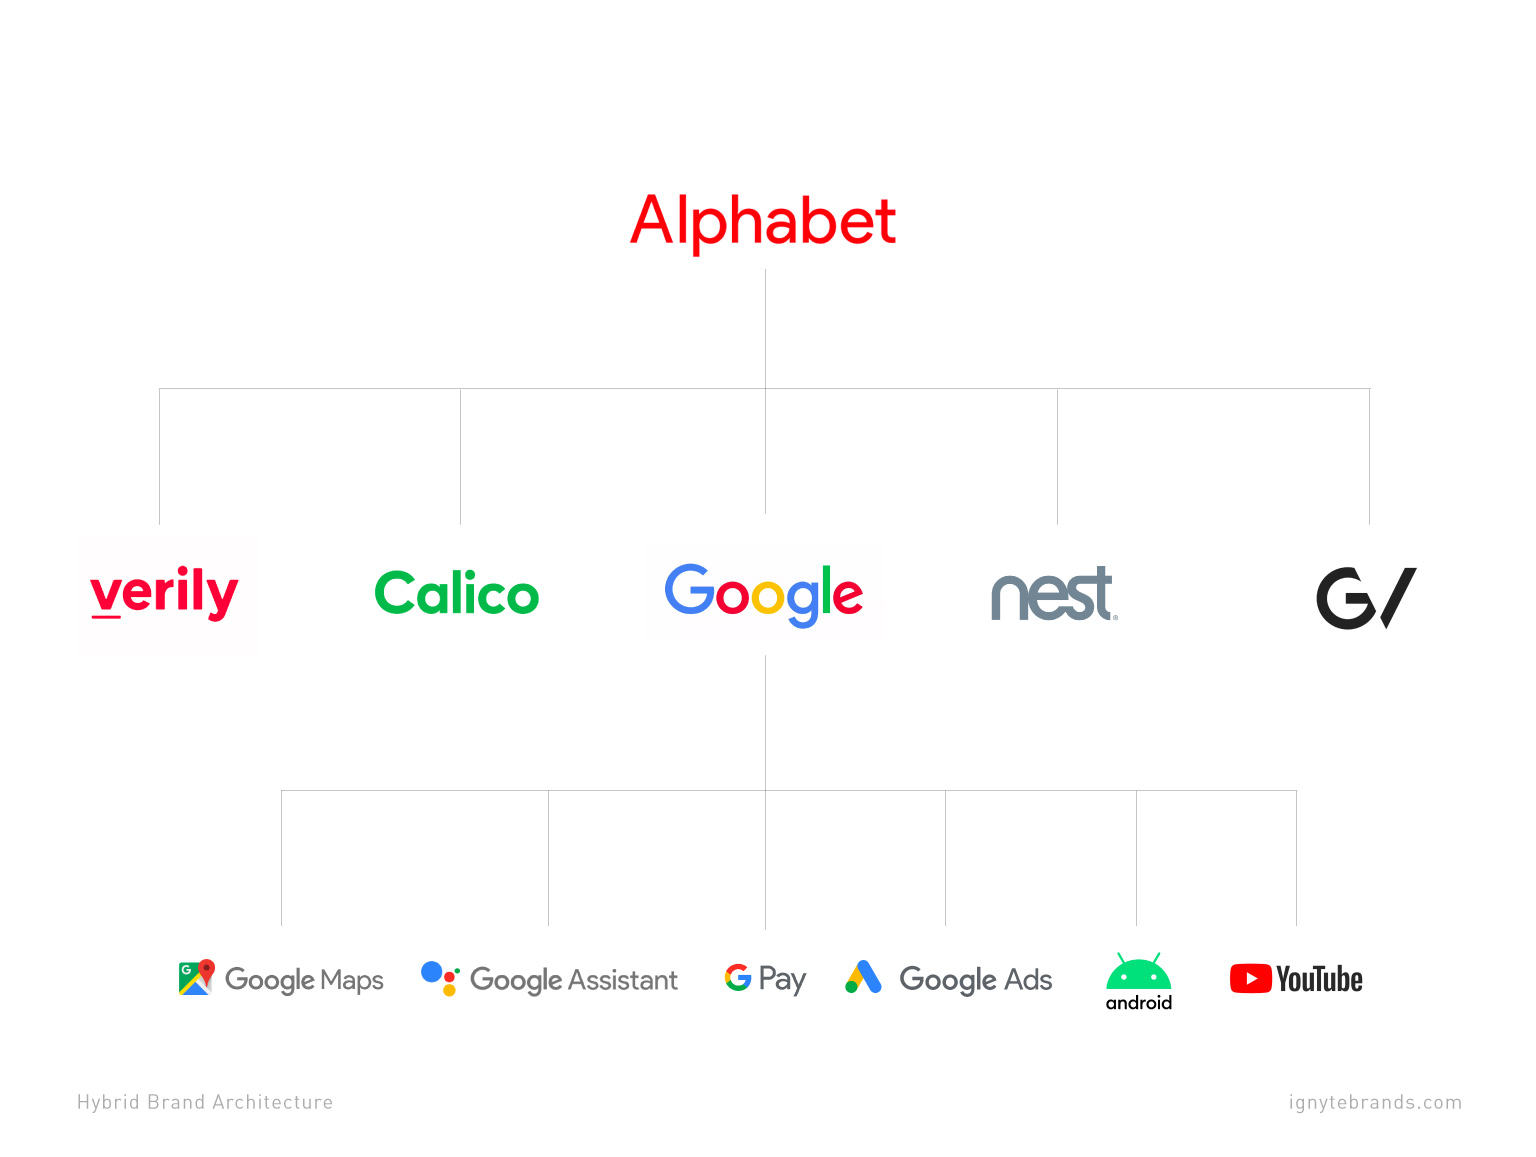 A diagram of the Alphabet brand portfolio as an example of a hybrid brand architecture